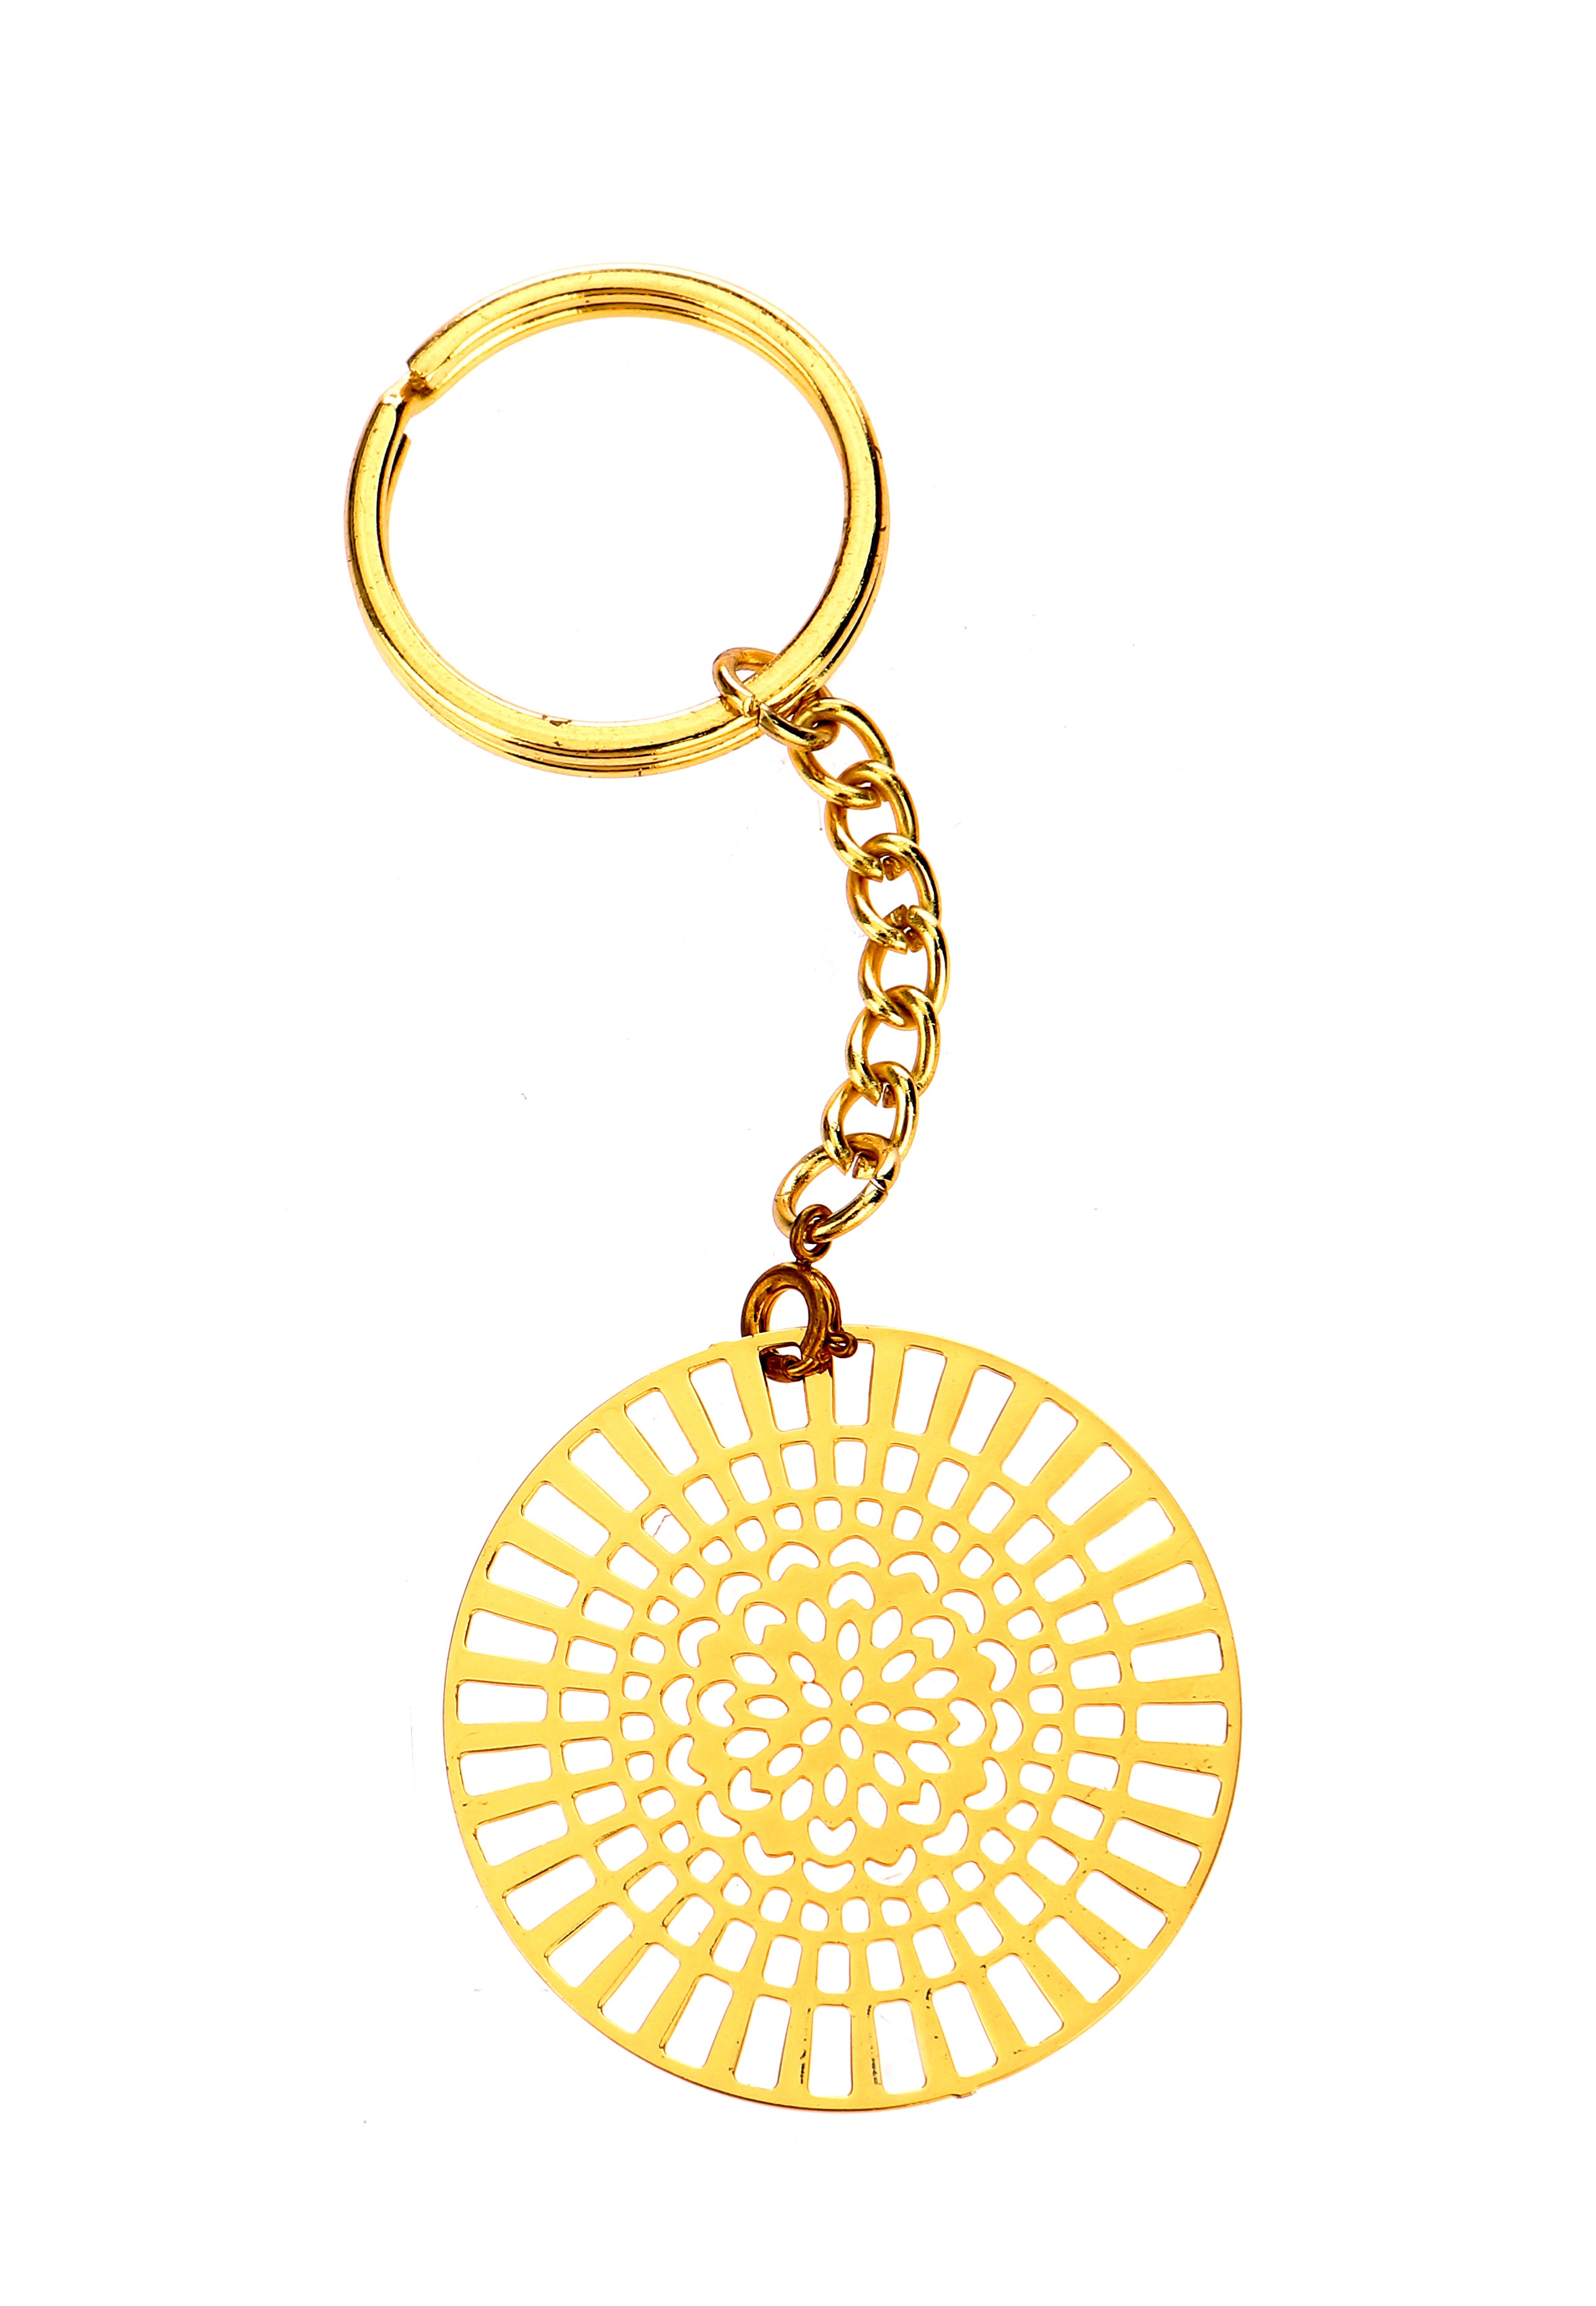 Adoraa's Dial Design Brass Key Chain Ring in Golden Finish